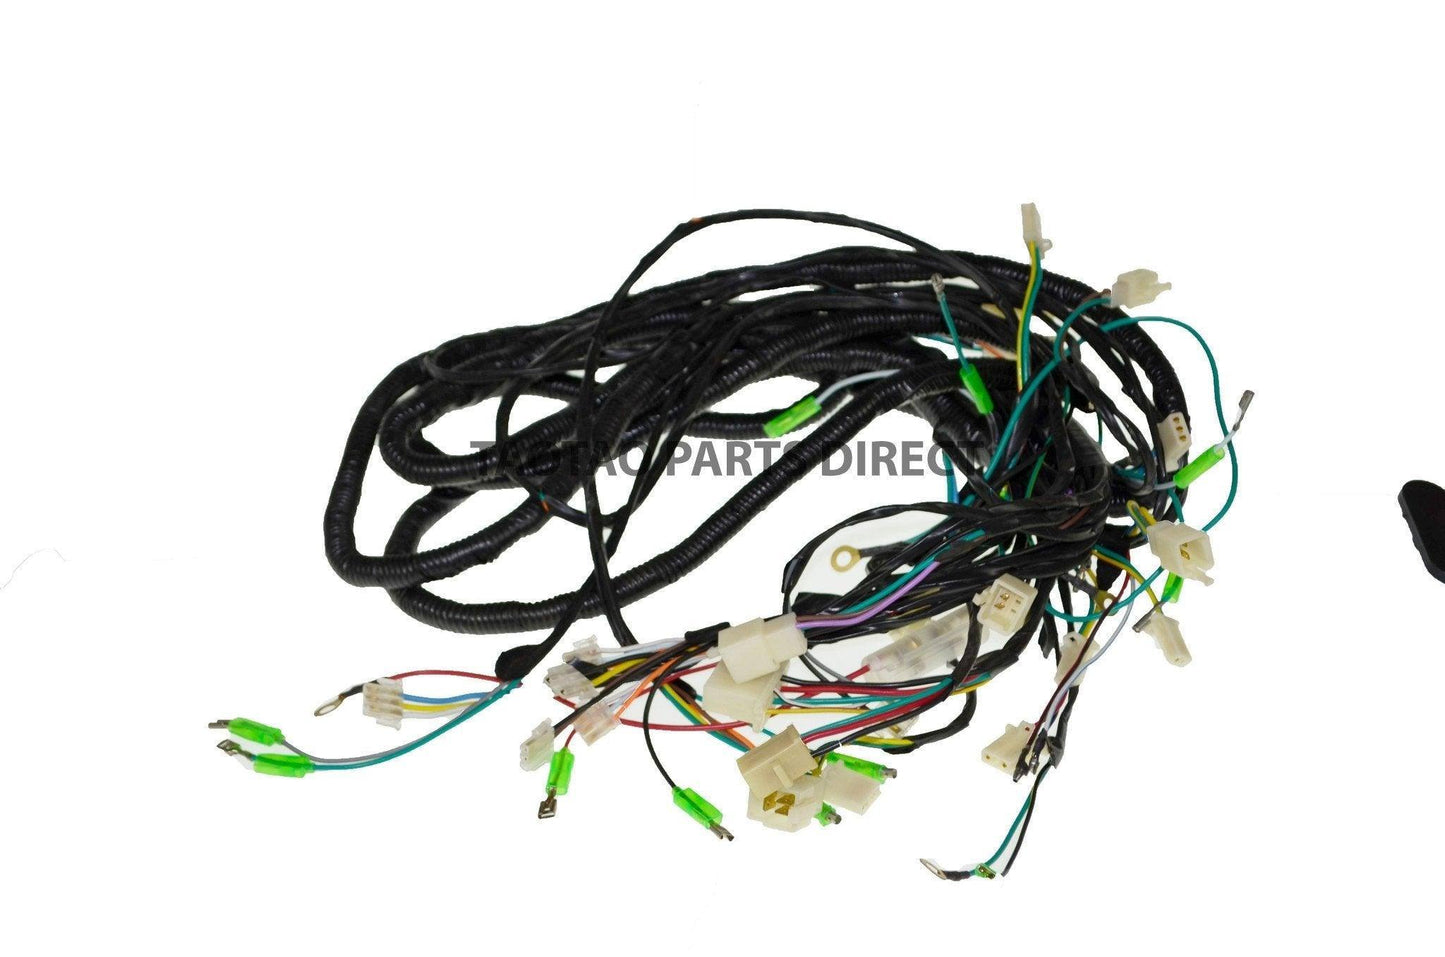 ATK150C/A Wire Harness - TaoTao Parts Direct